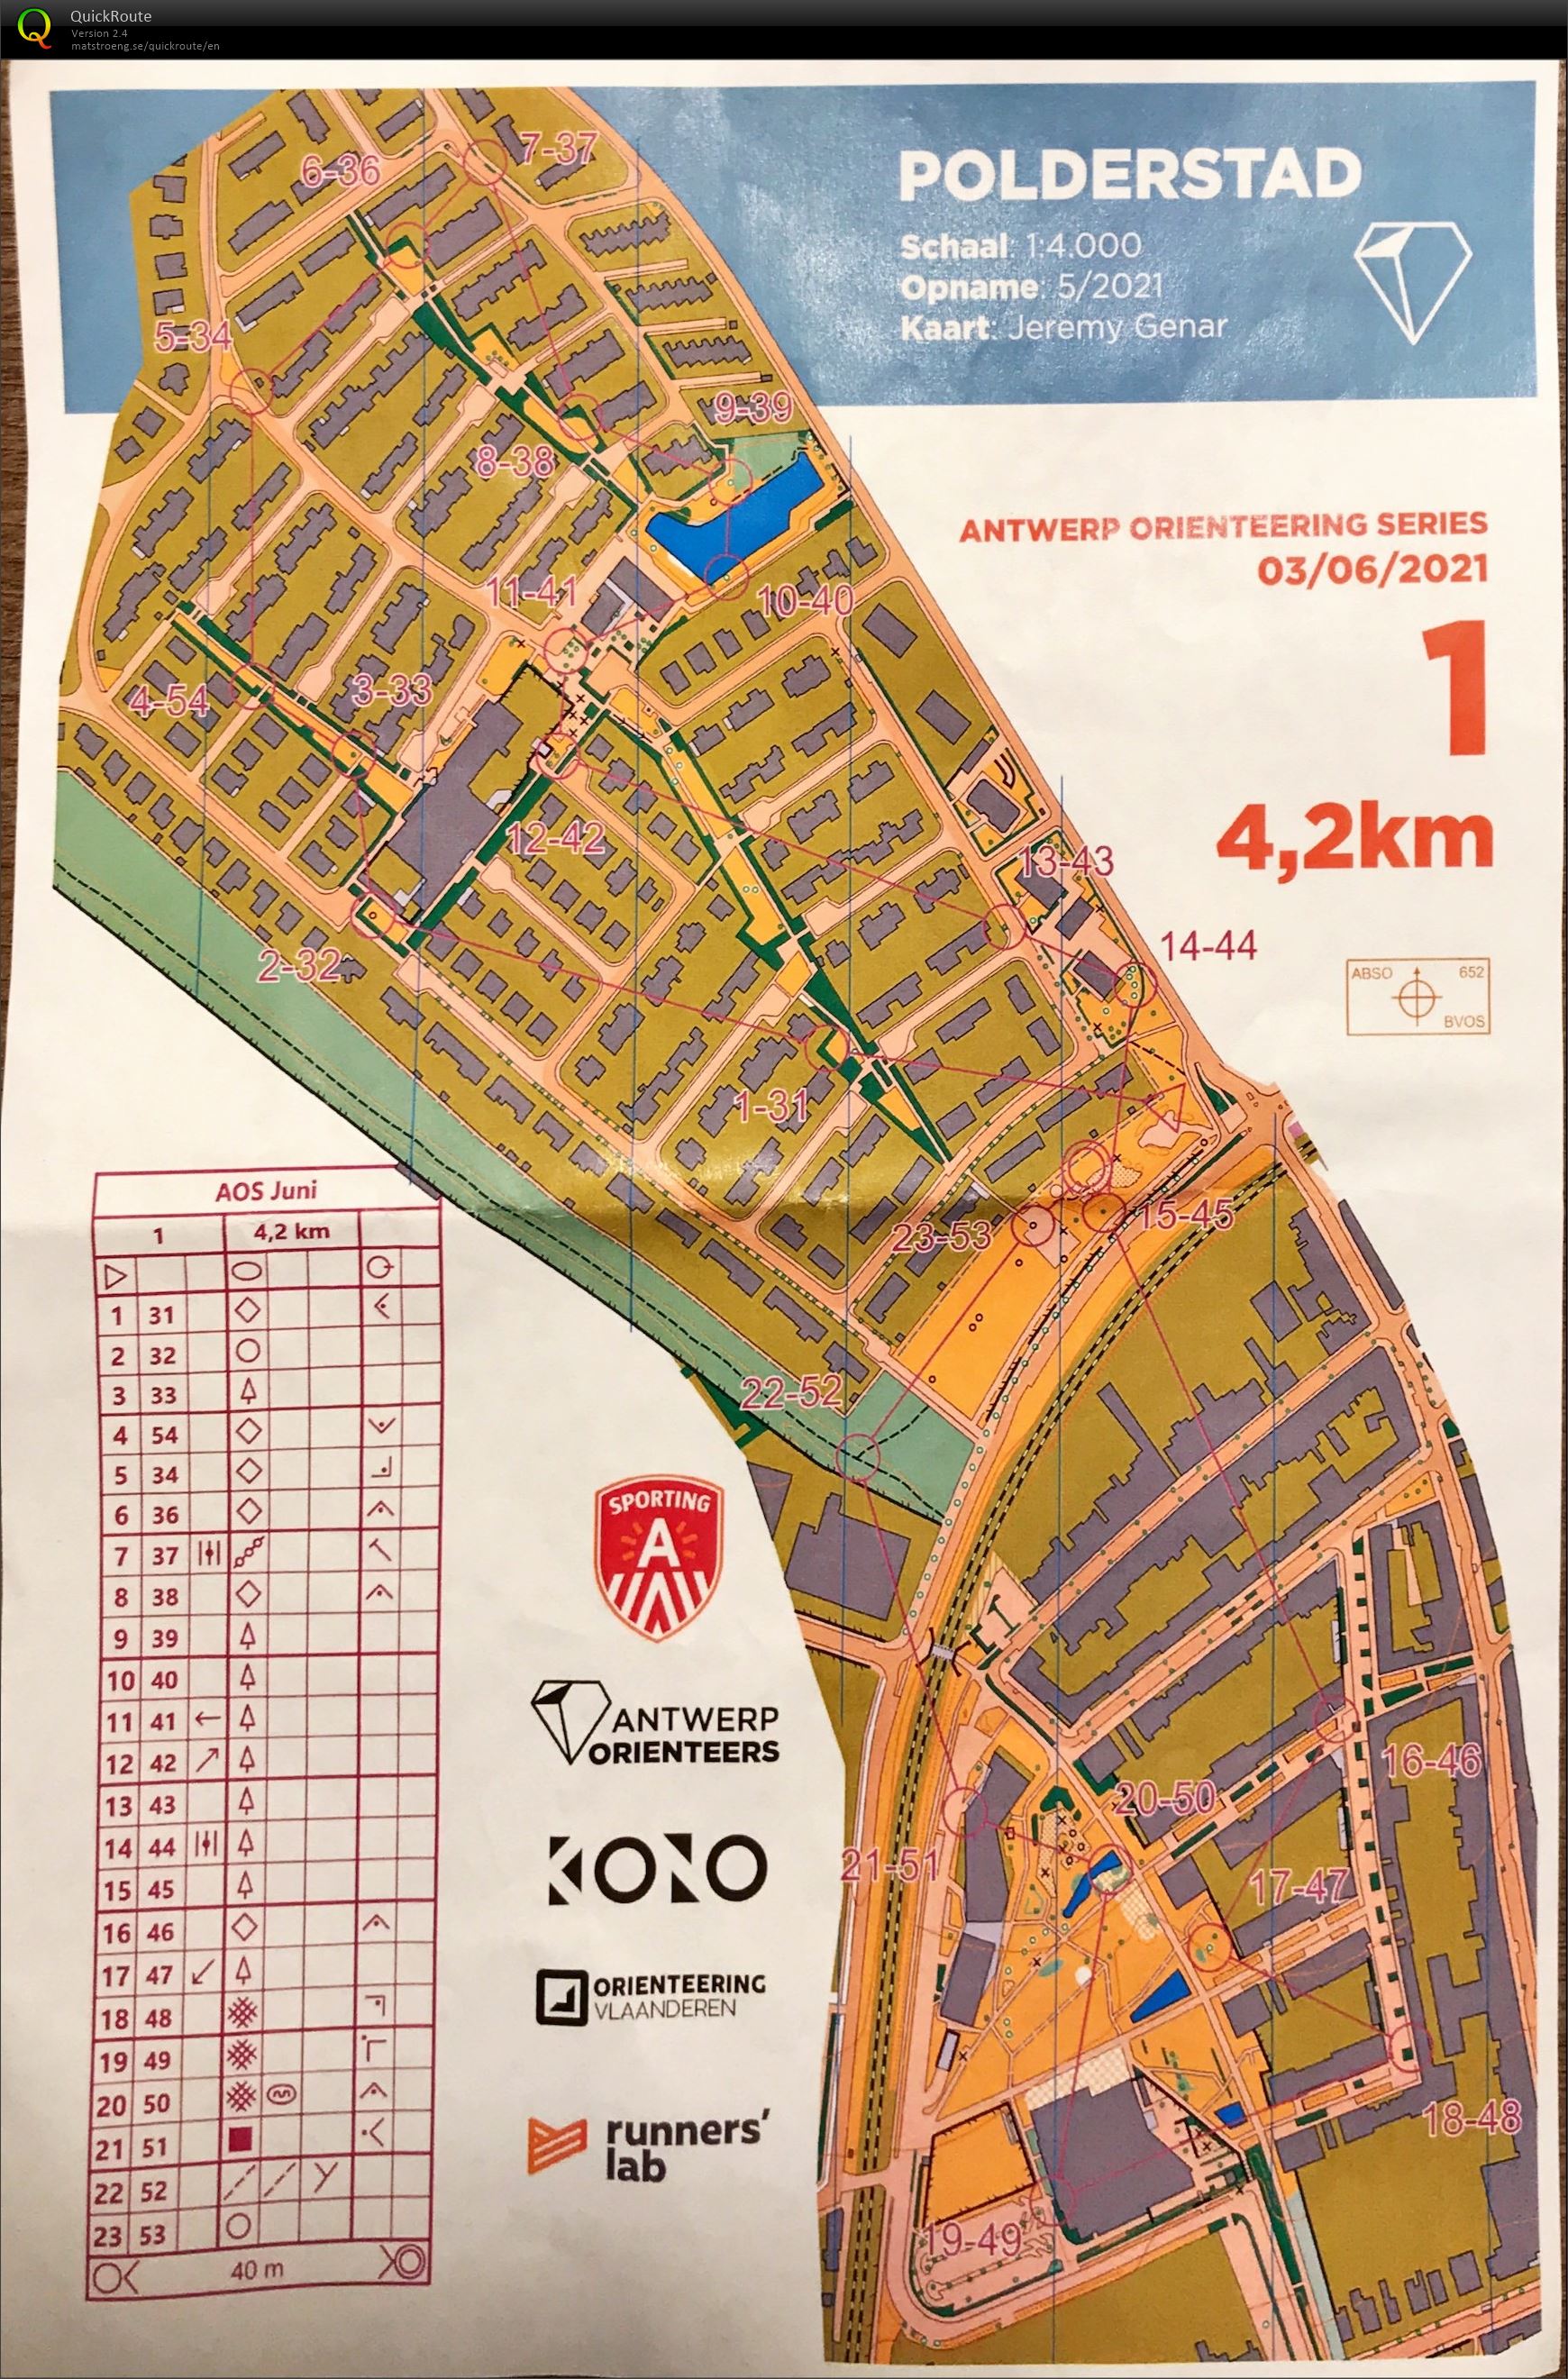 Antwerp Orienteering Series - Polderstad - 4.2K (03.06.2021)